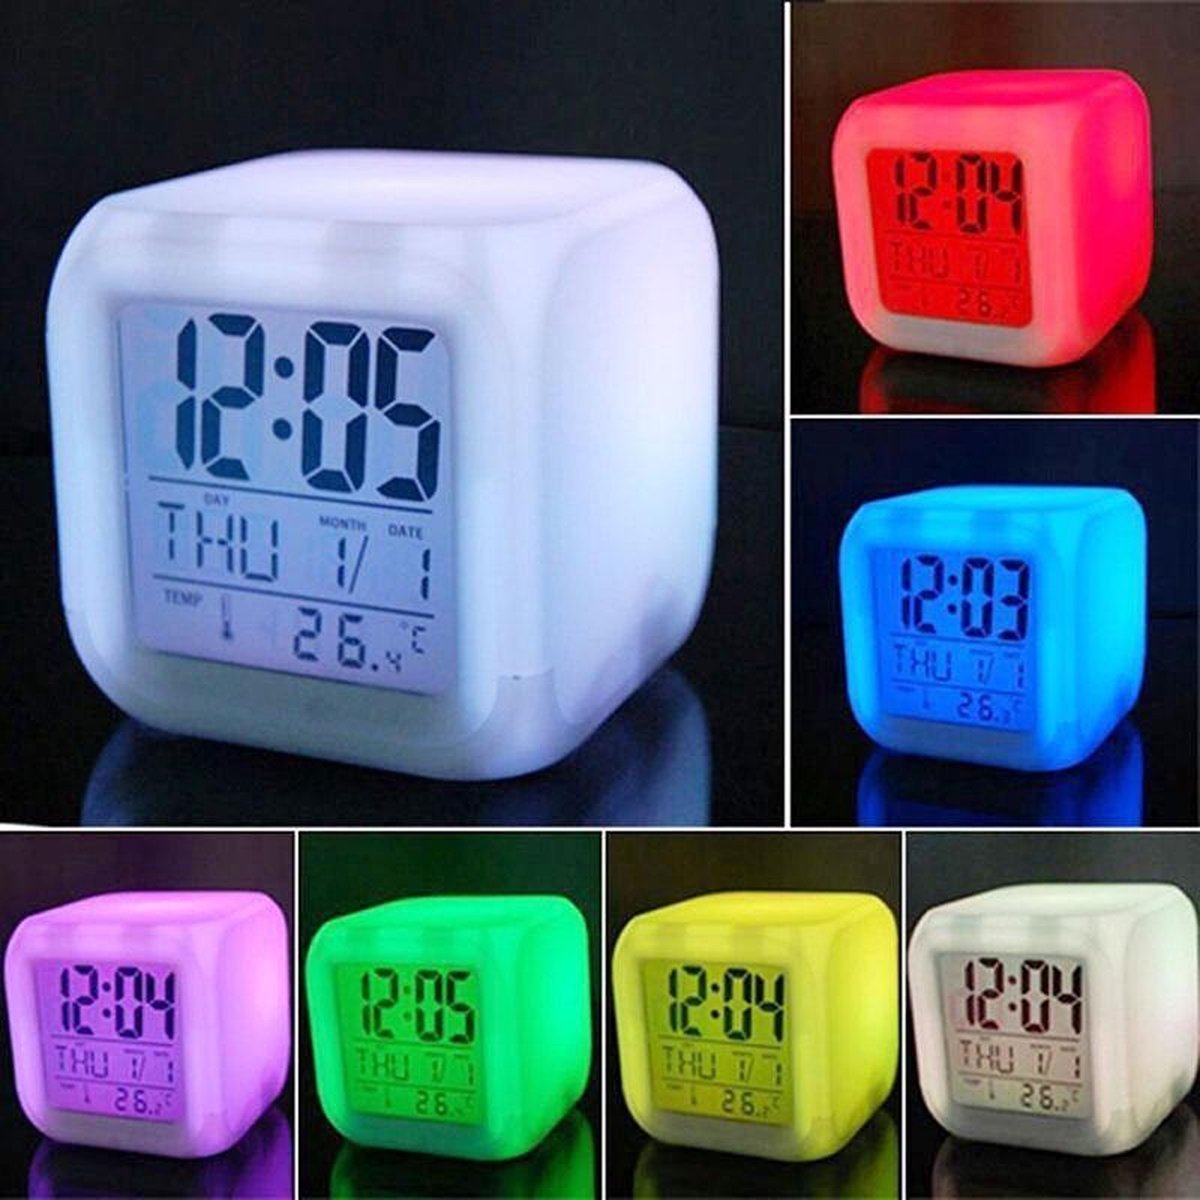 LED klok | alarmklok | snooze | datum en tijd | thermometer | 7 kleuren